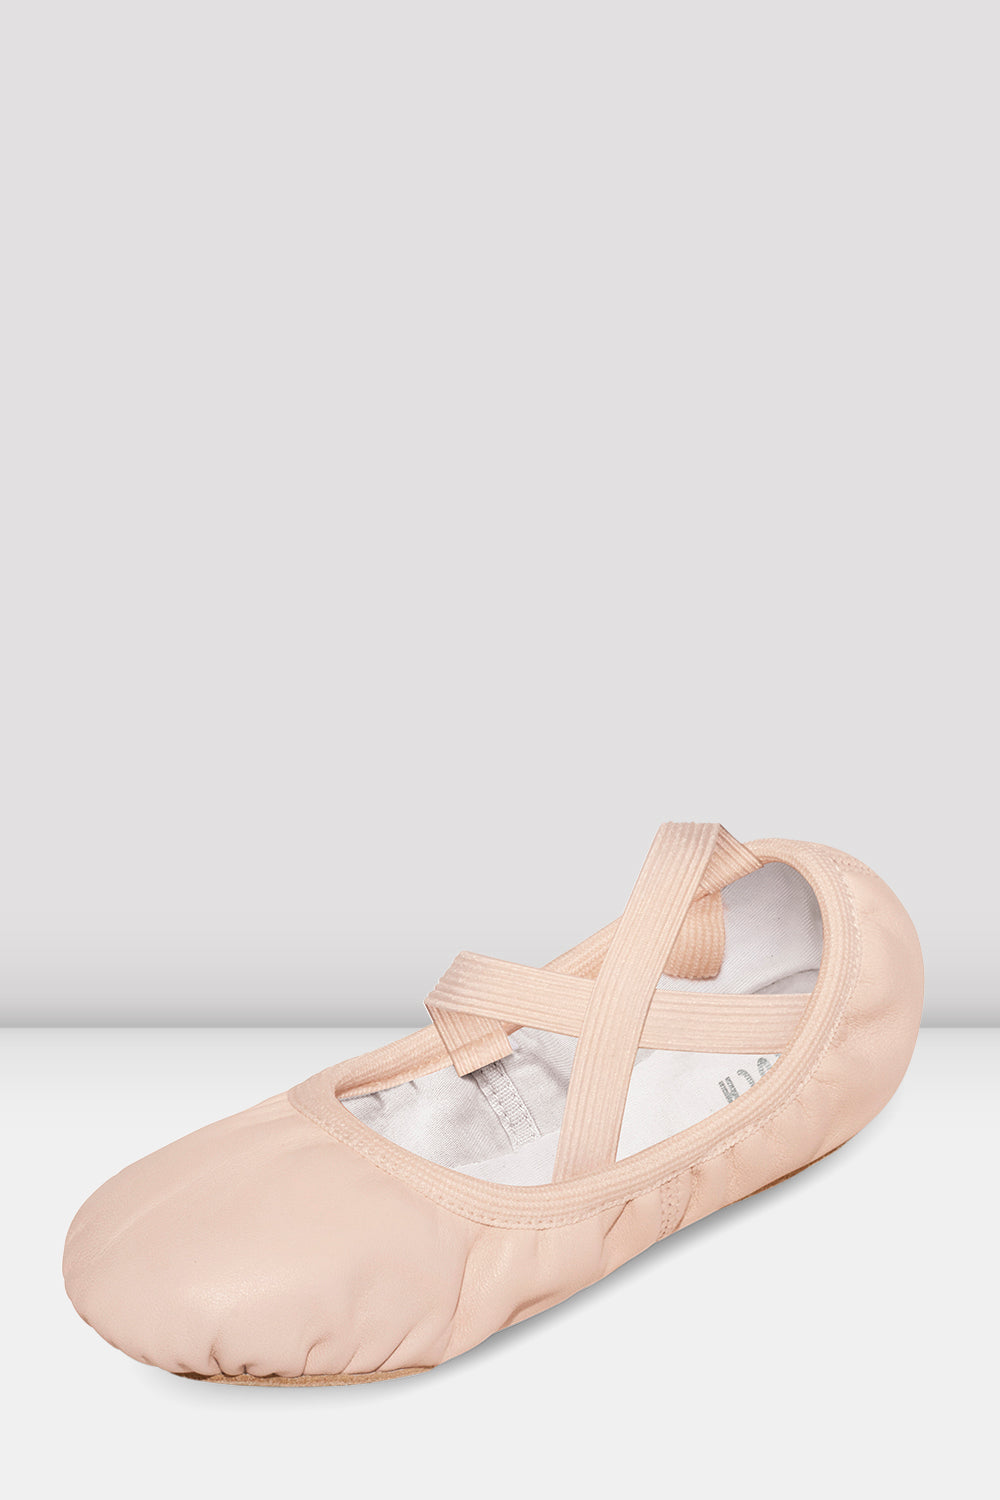 Bloch Ascella Ballerina Flat - ShopStyle